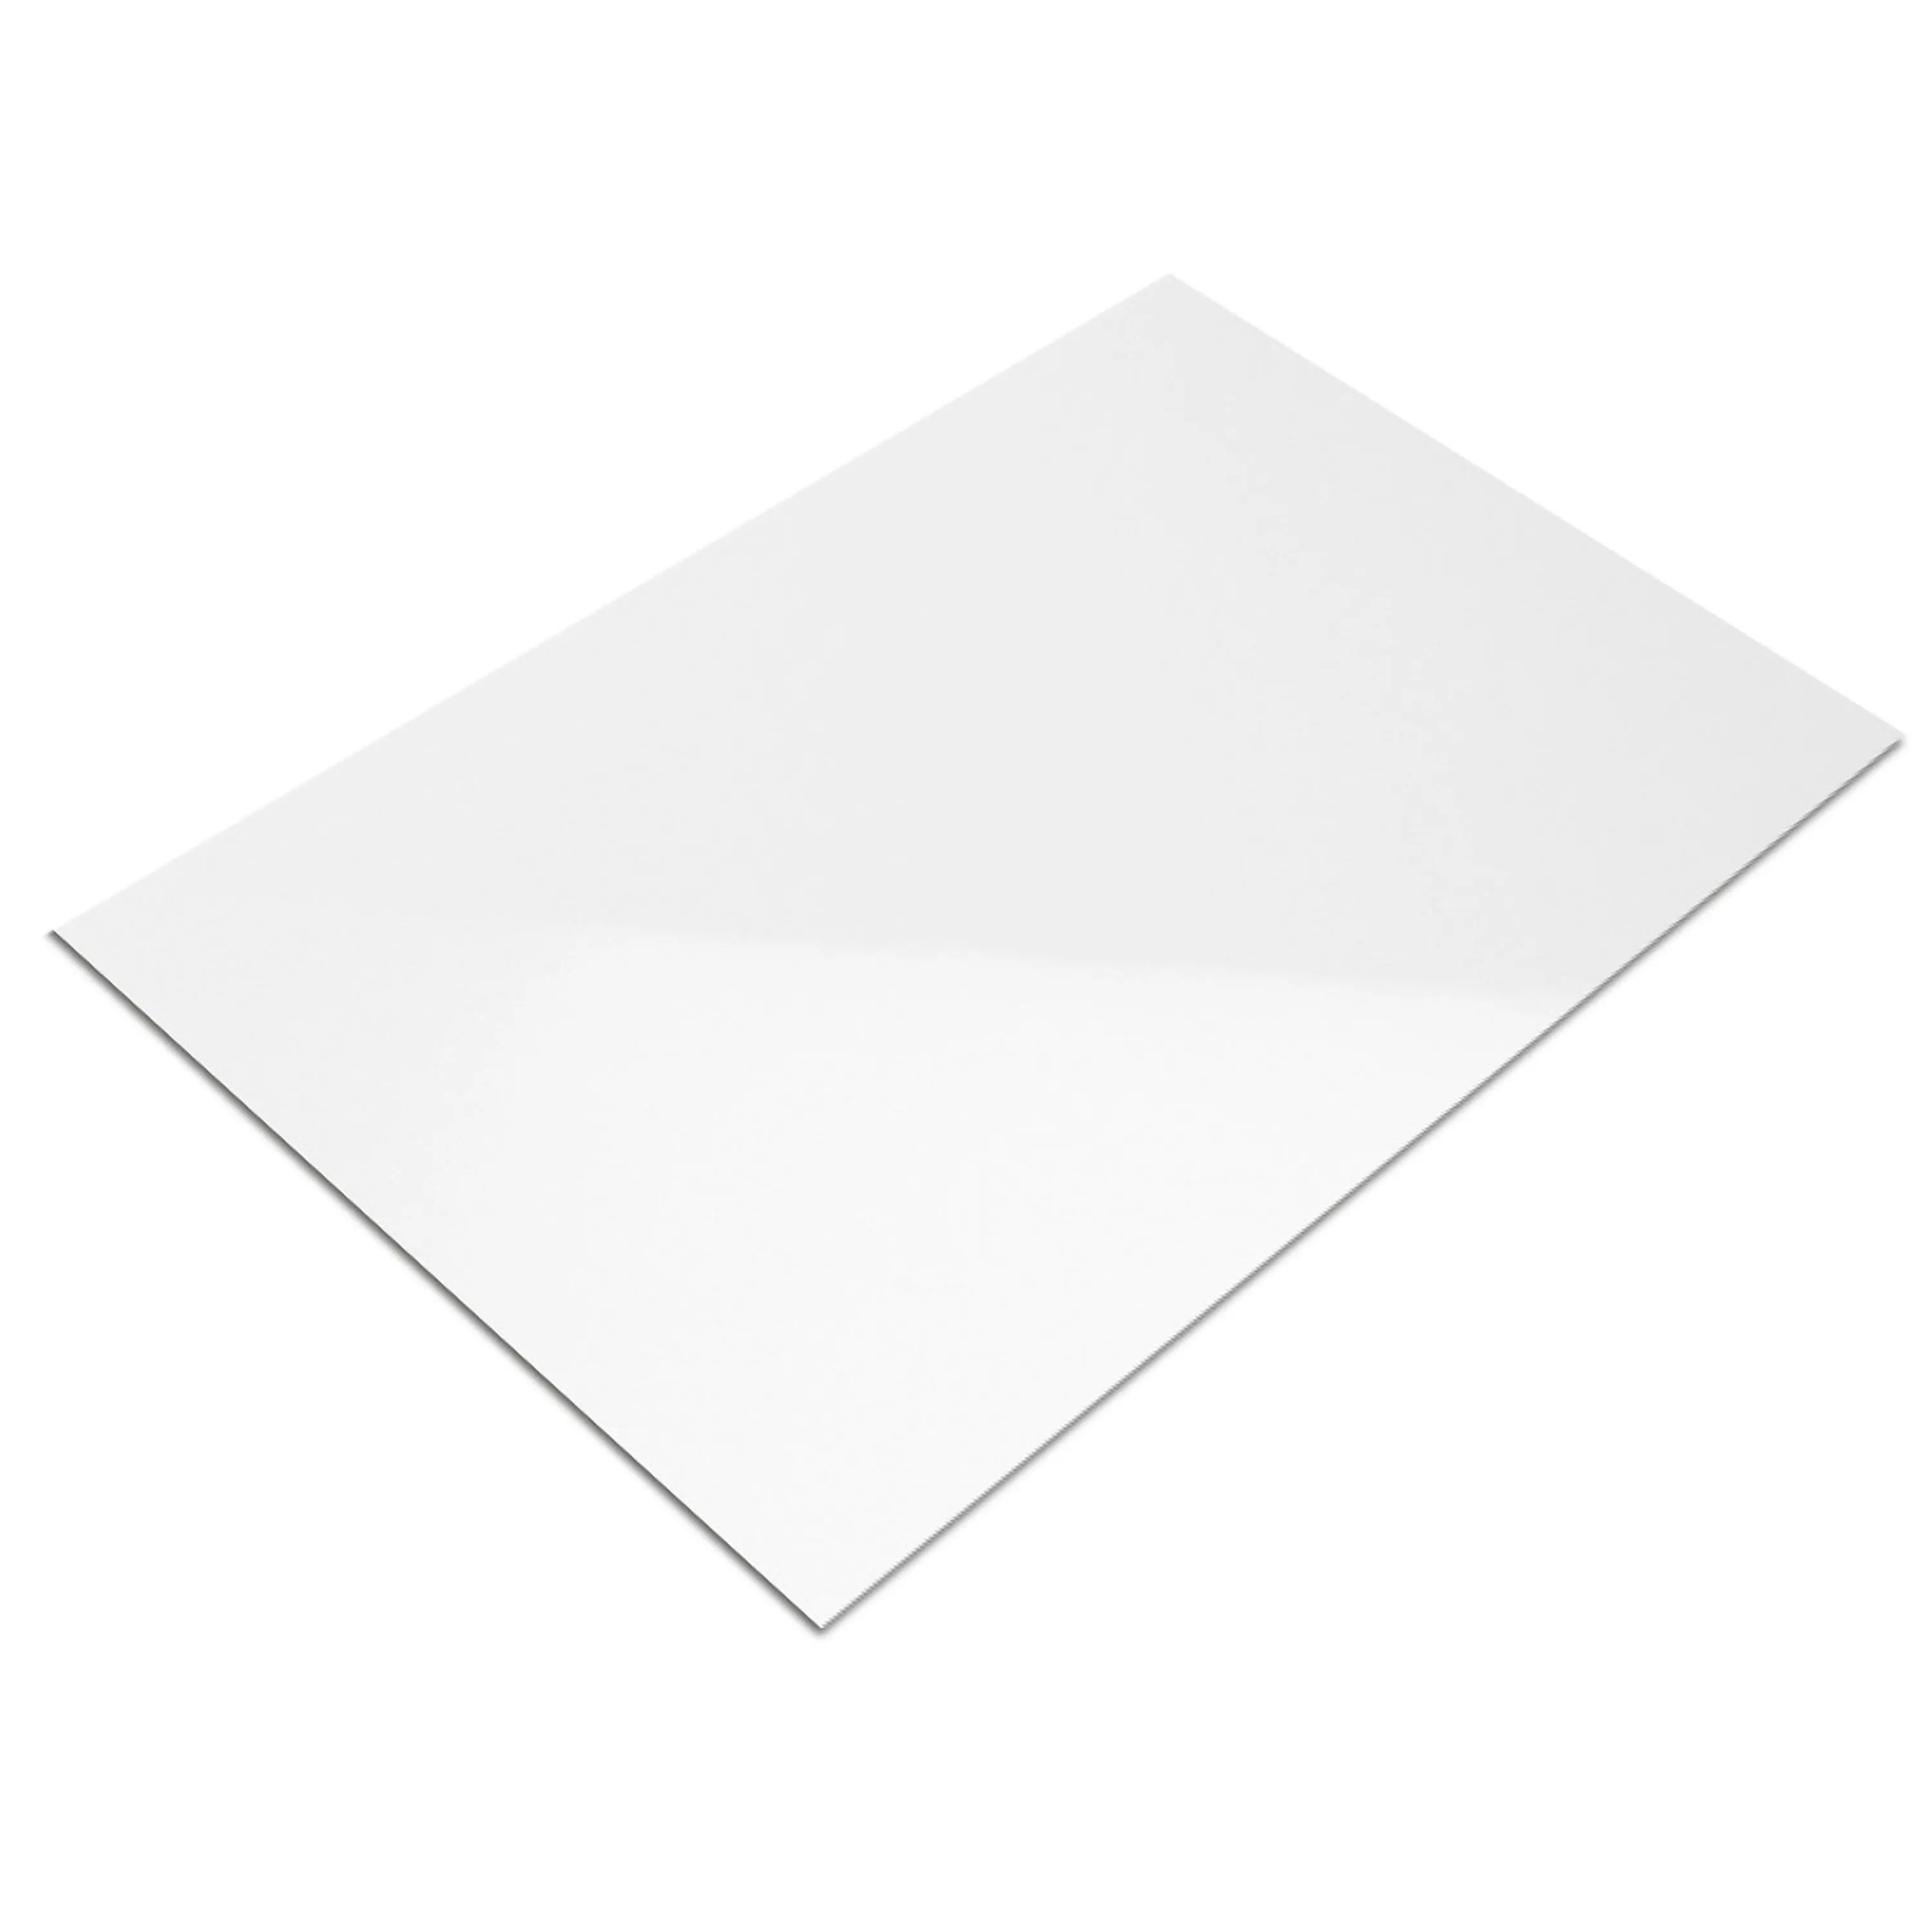 Sample Wall Tiles Fenway White Glossy 15x20cm